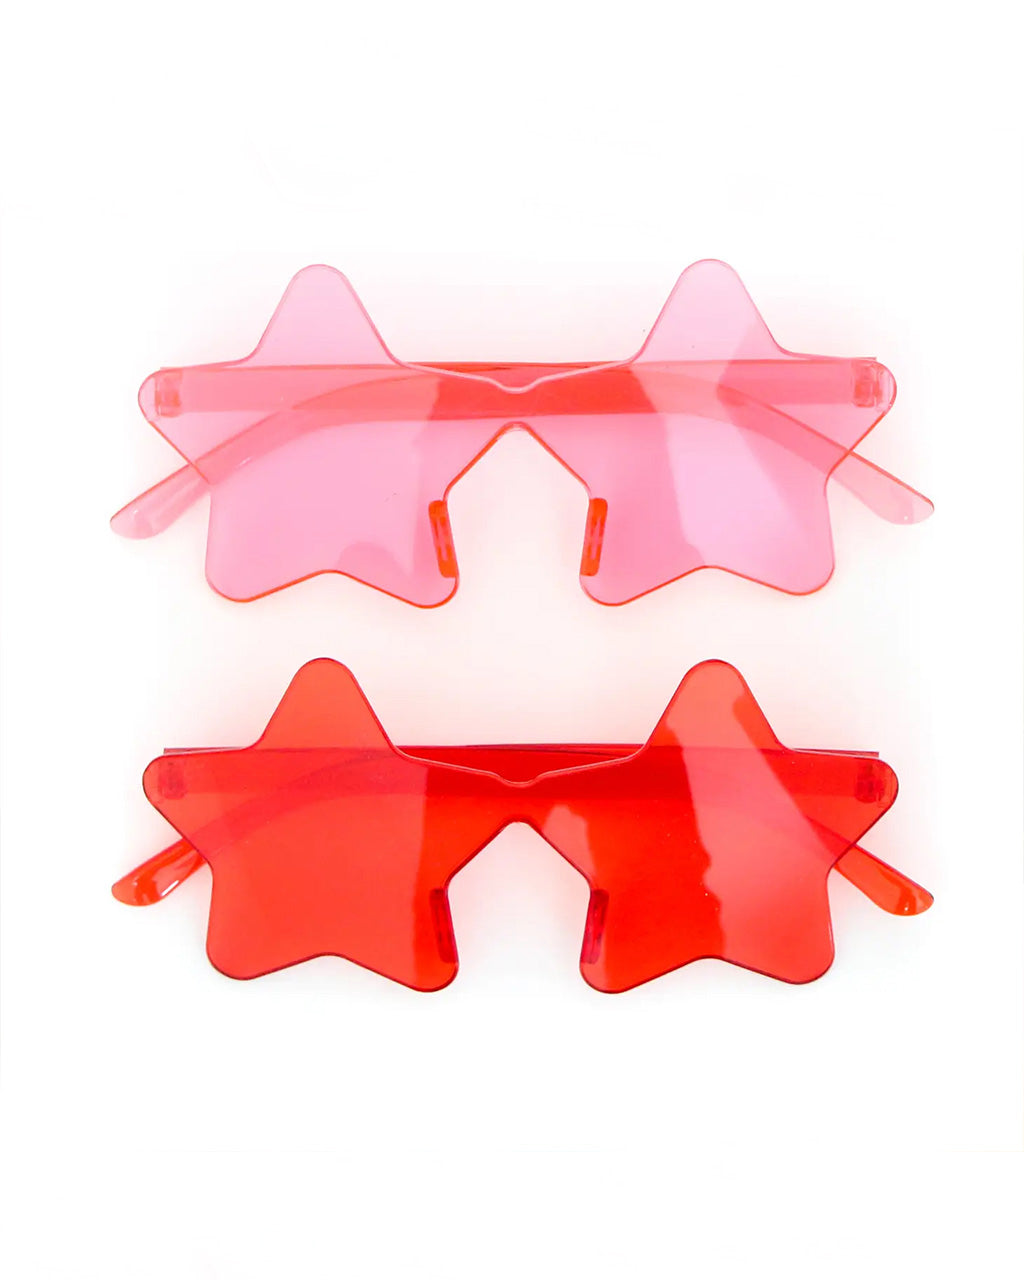 Star shaped sunglasses